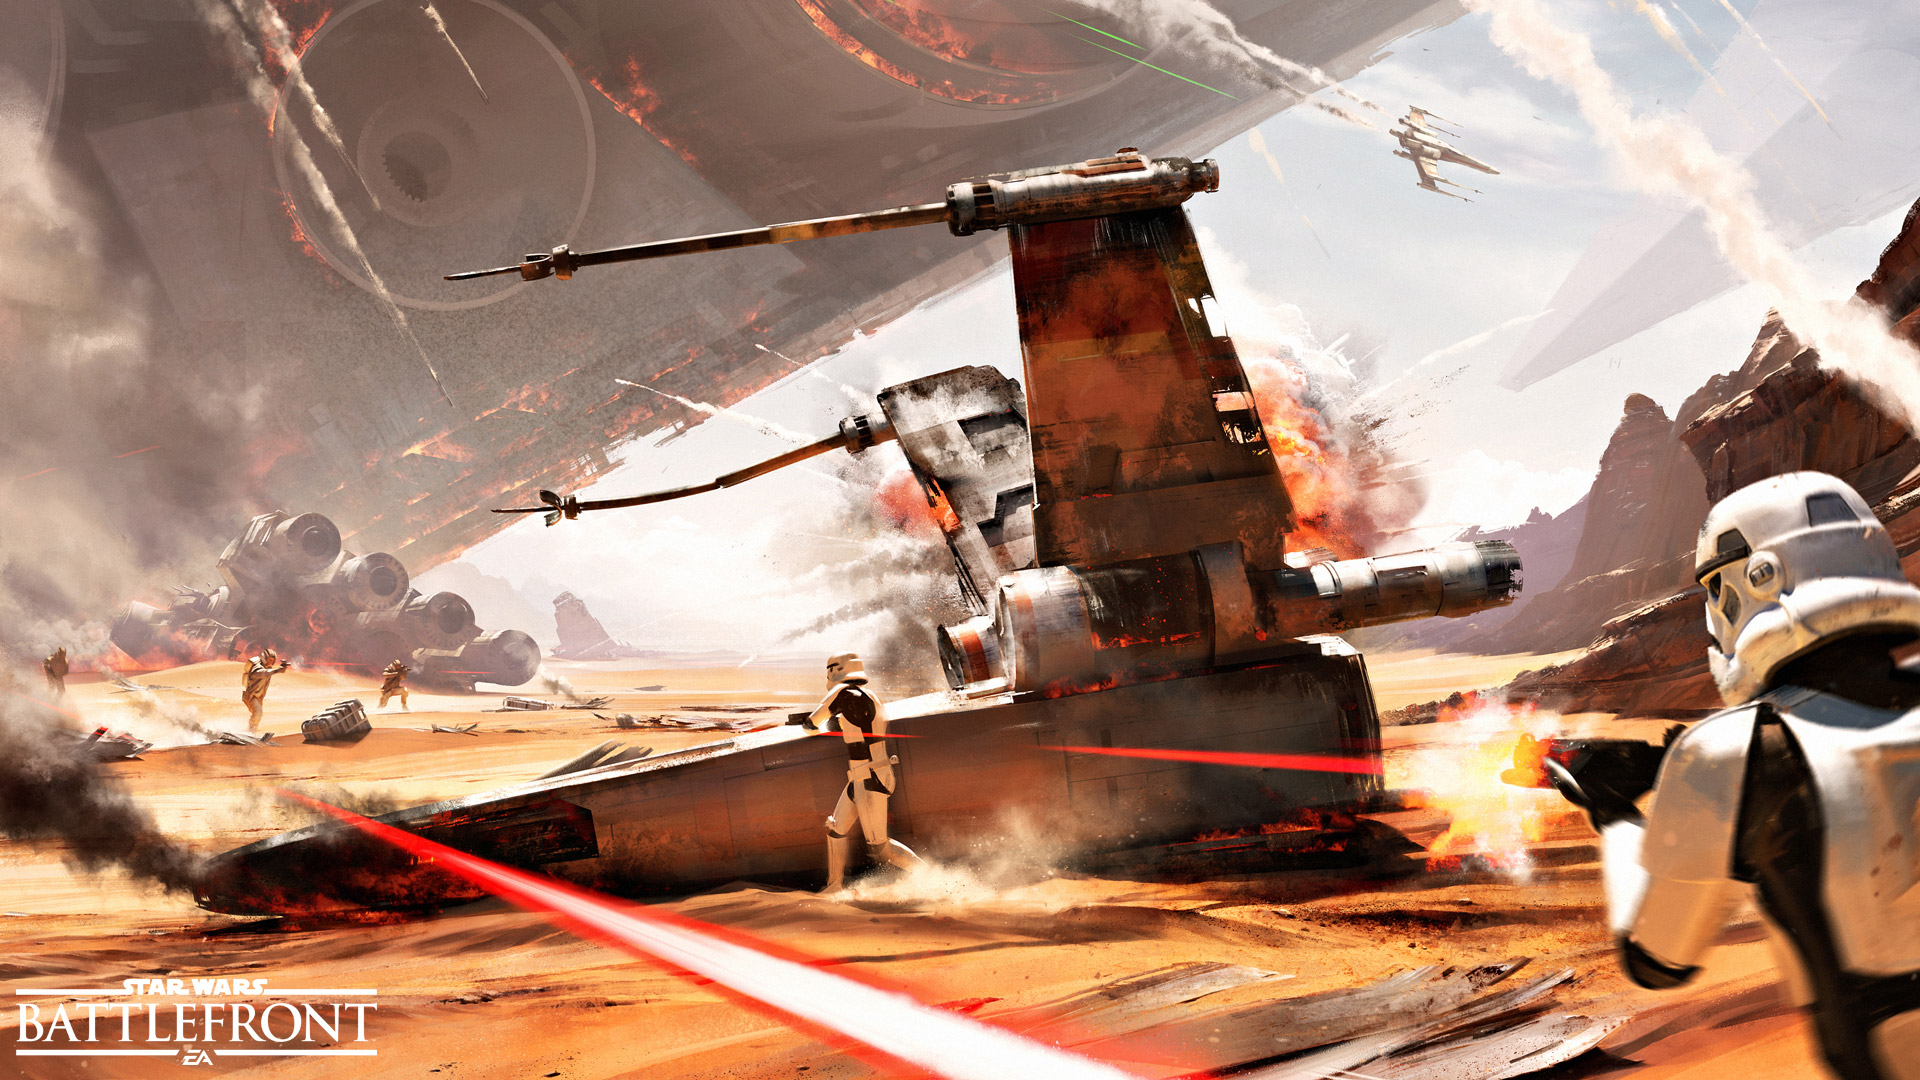 Star Wars Battlefront Battle Of Jakku Teaser Trailer Segmentnext